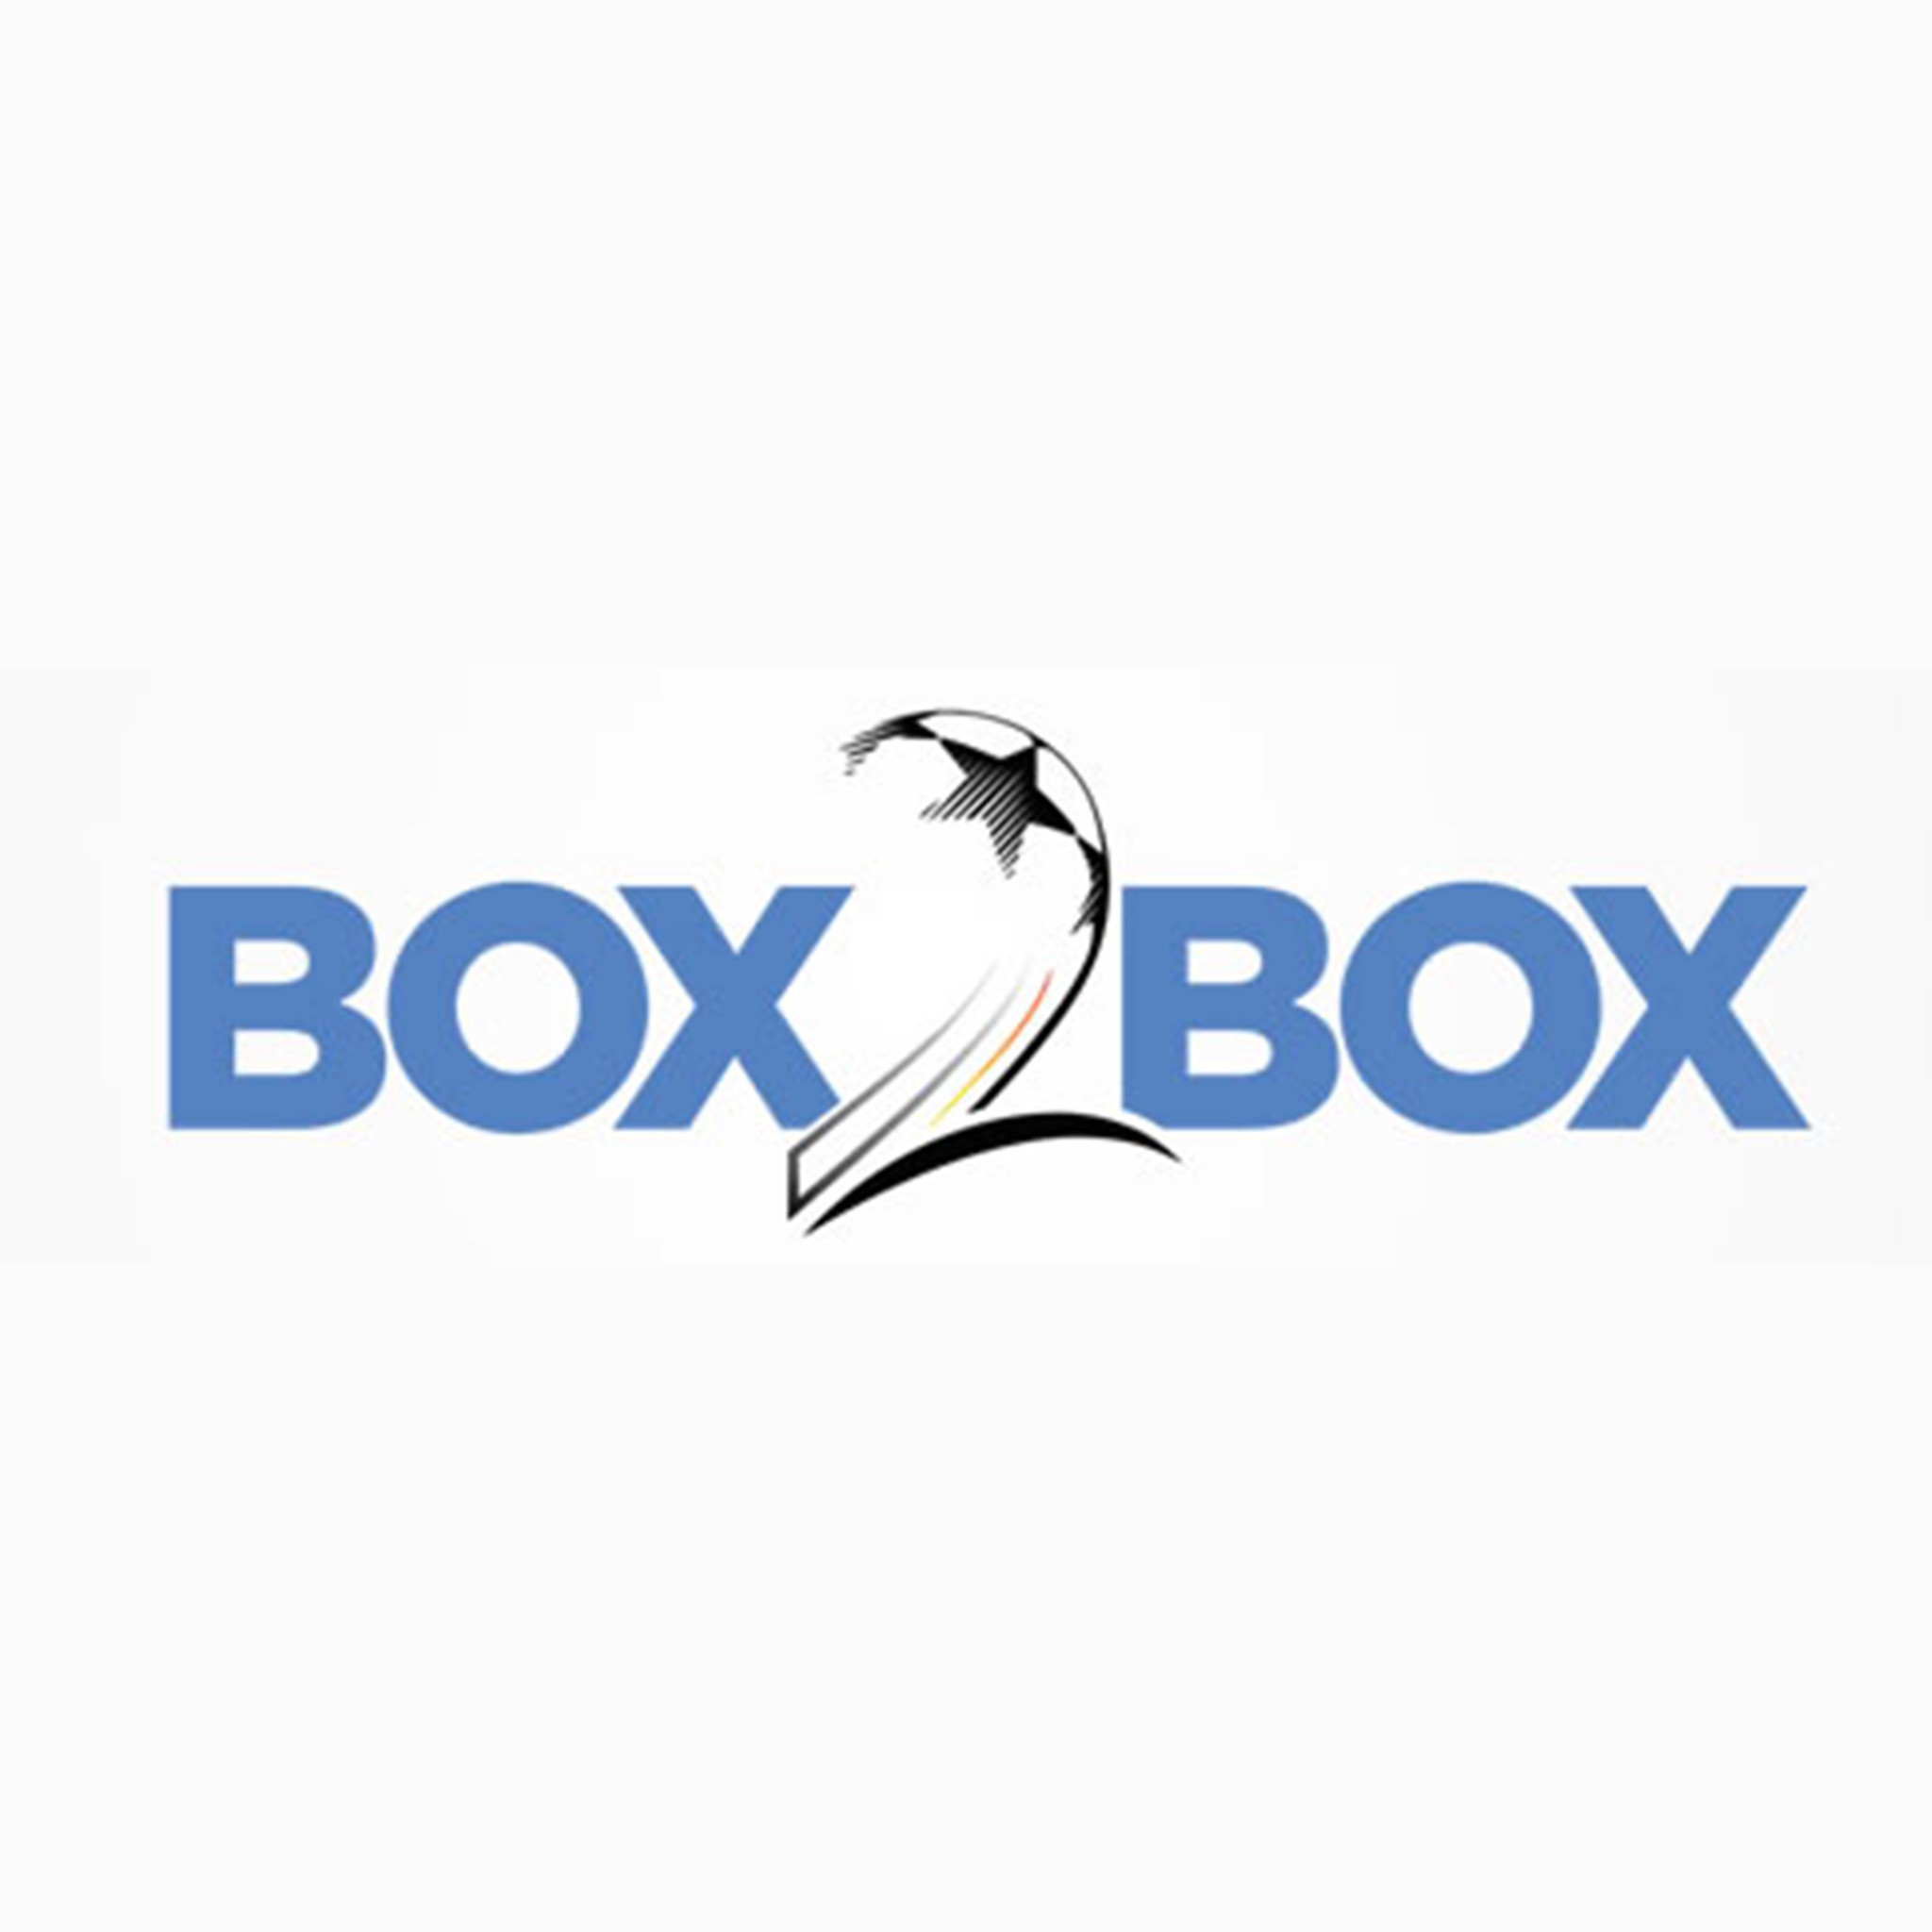 Box2Box - Nick Montgomery after mighty Mariners progress, Carl Anka grades Erik ten Hag's season